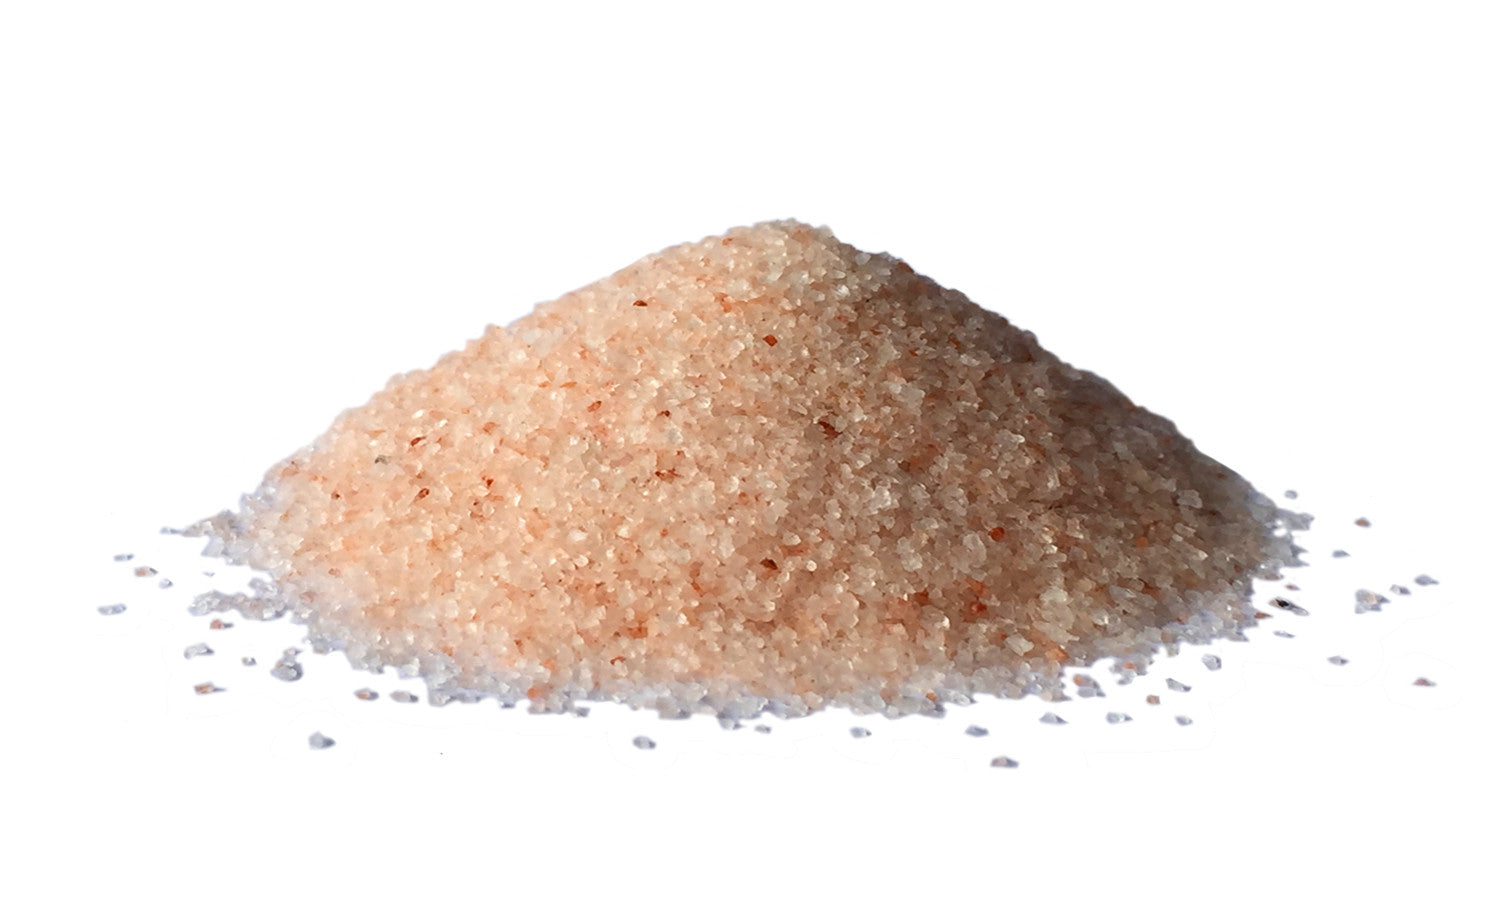 Himalayan Pink Sea Salt / Fine Grain - HEPPS SALT CO. 